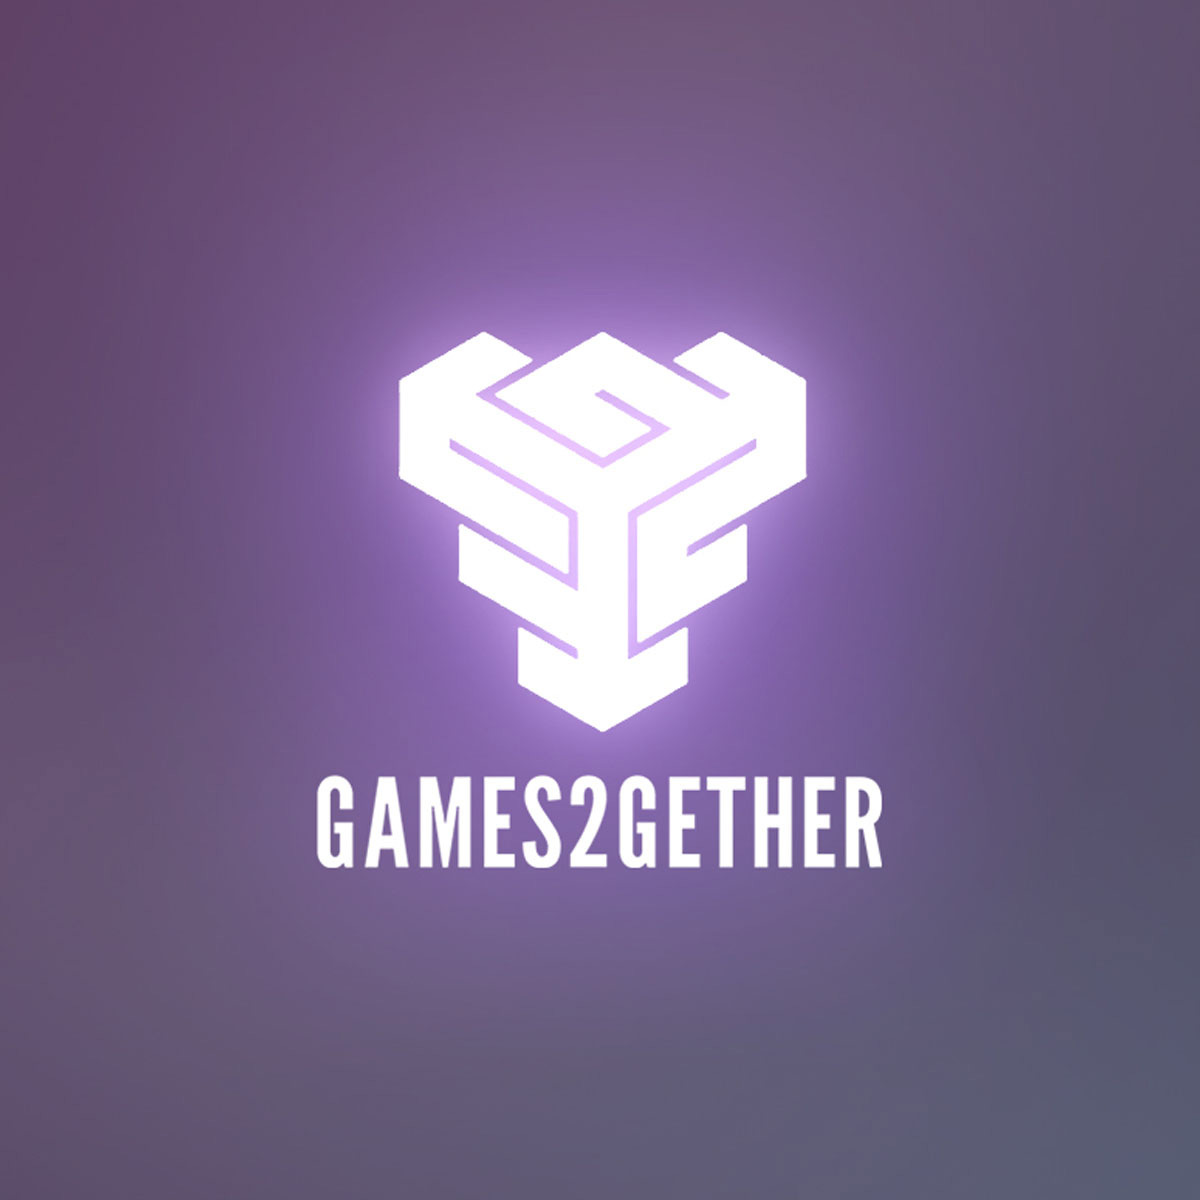 www.games2gether.com